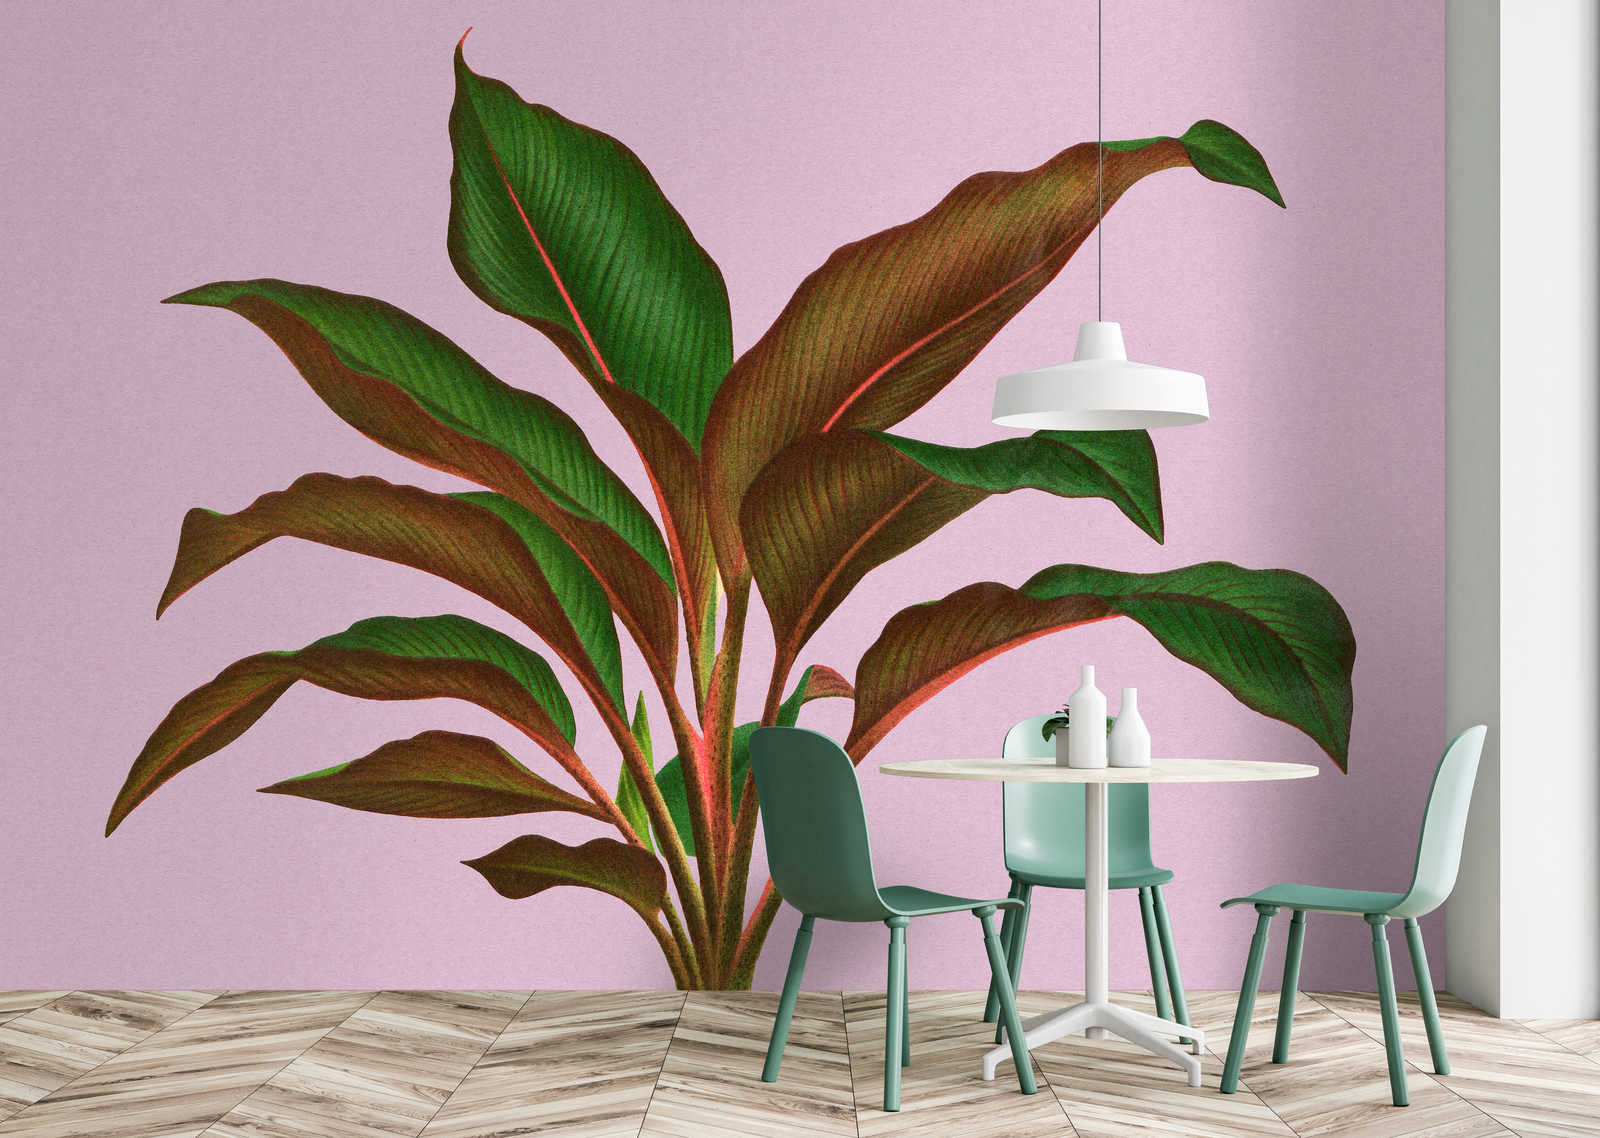             Leaf Garden 3 - leaves mural pink with tropical fern leaf
        